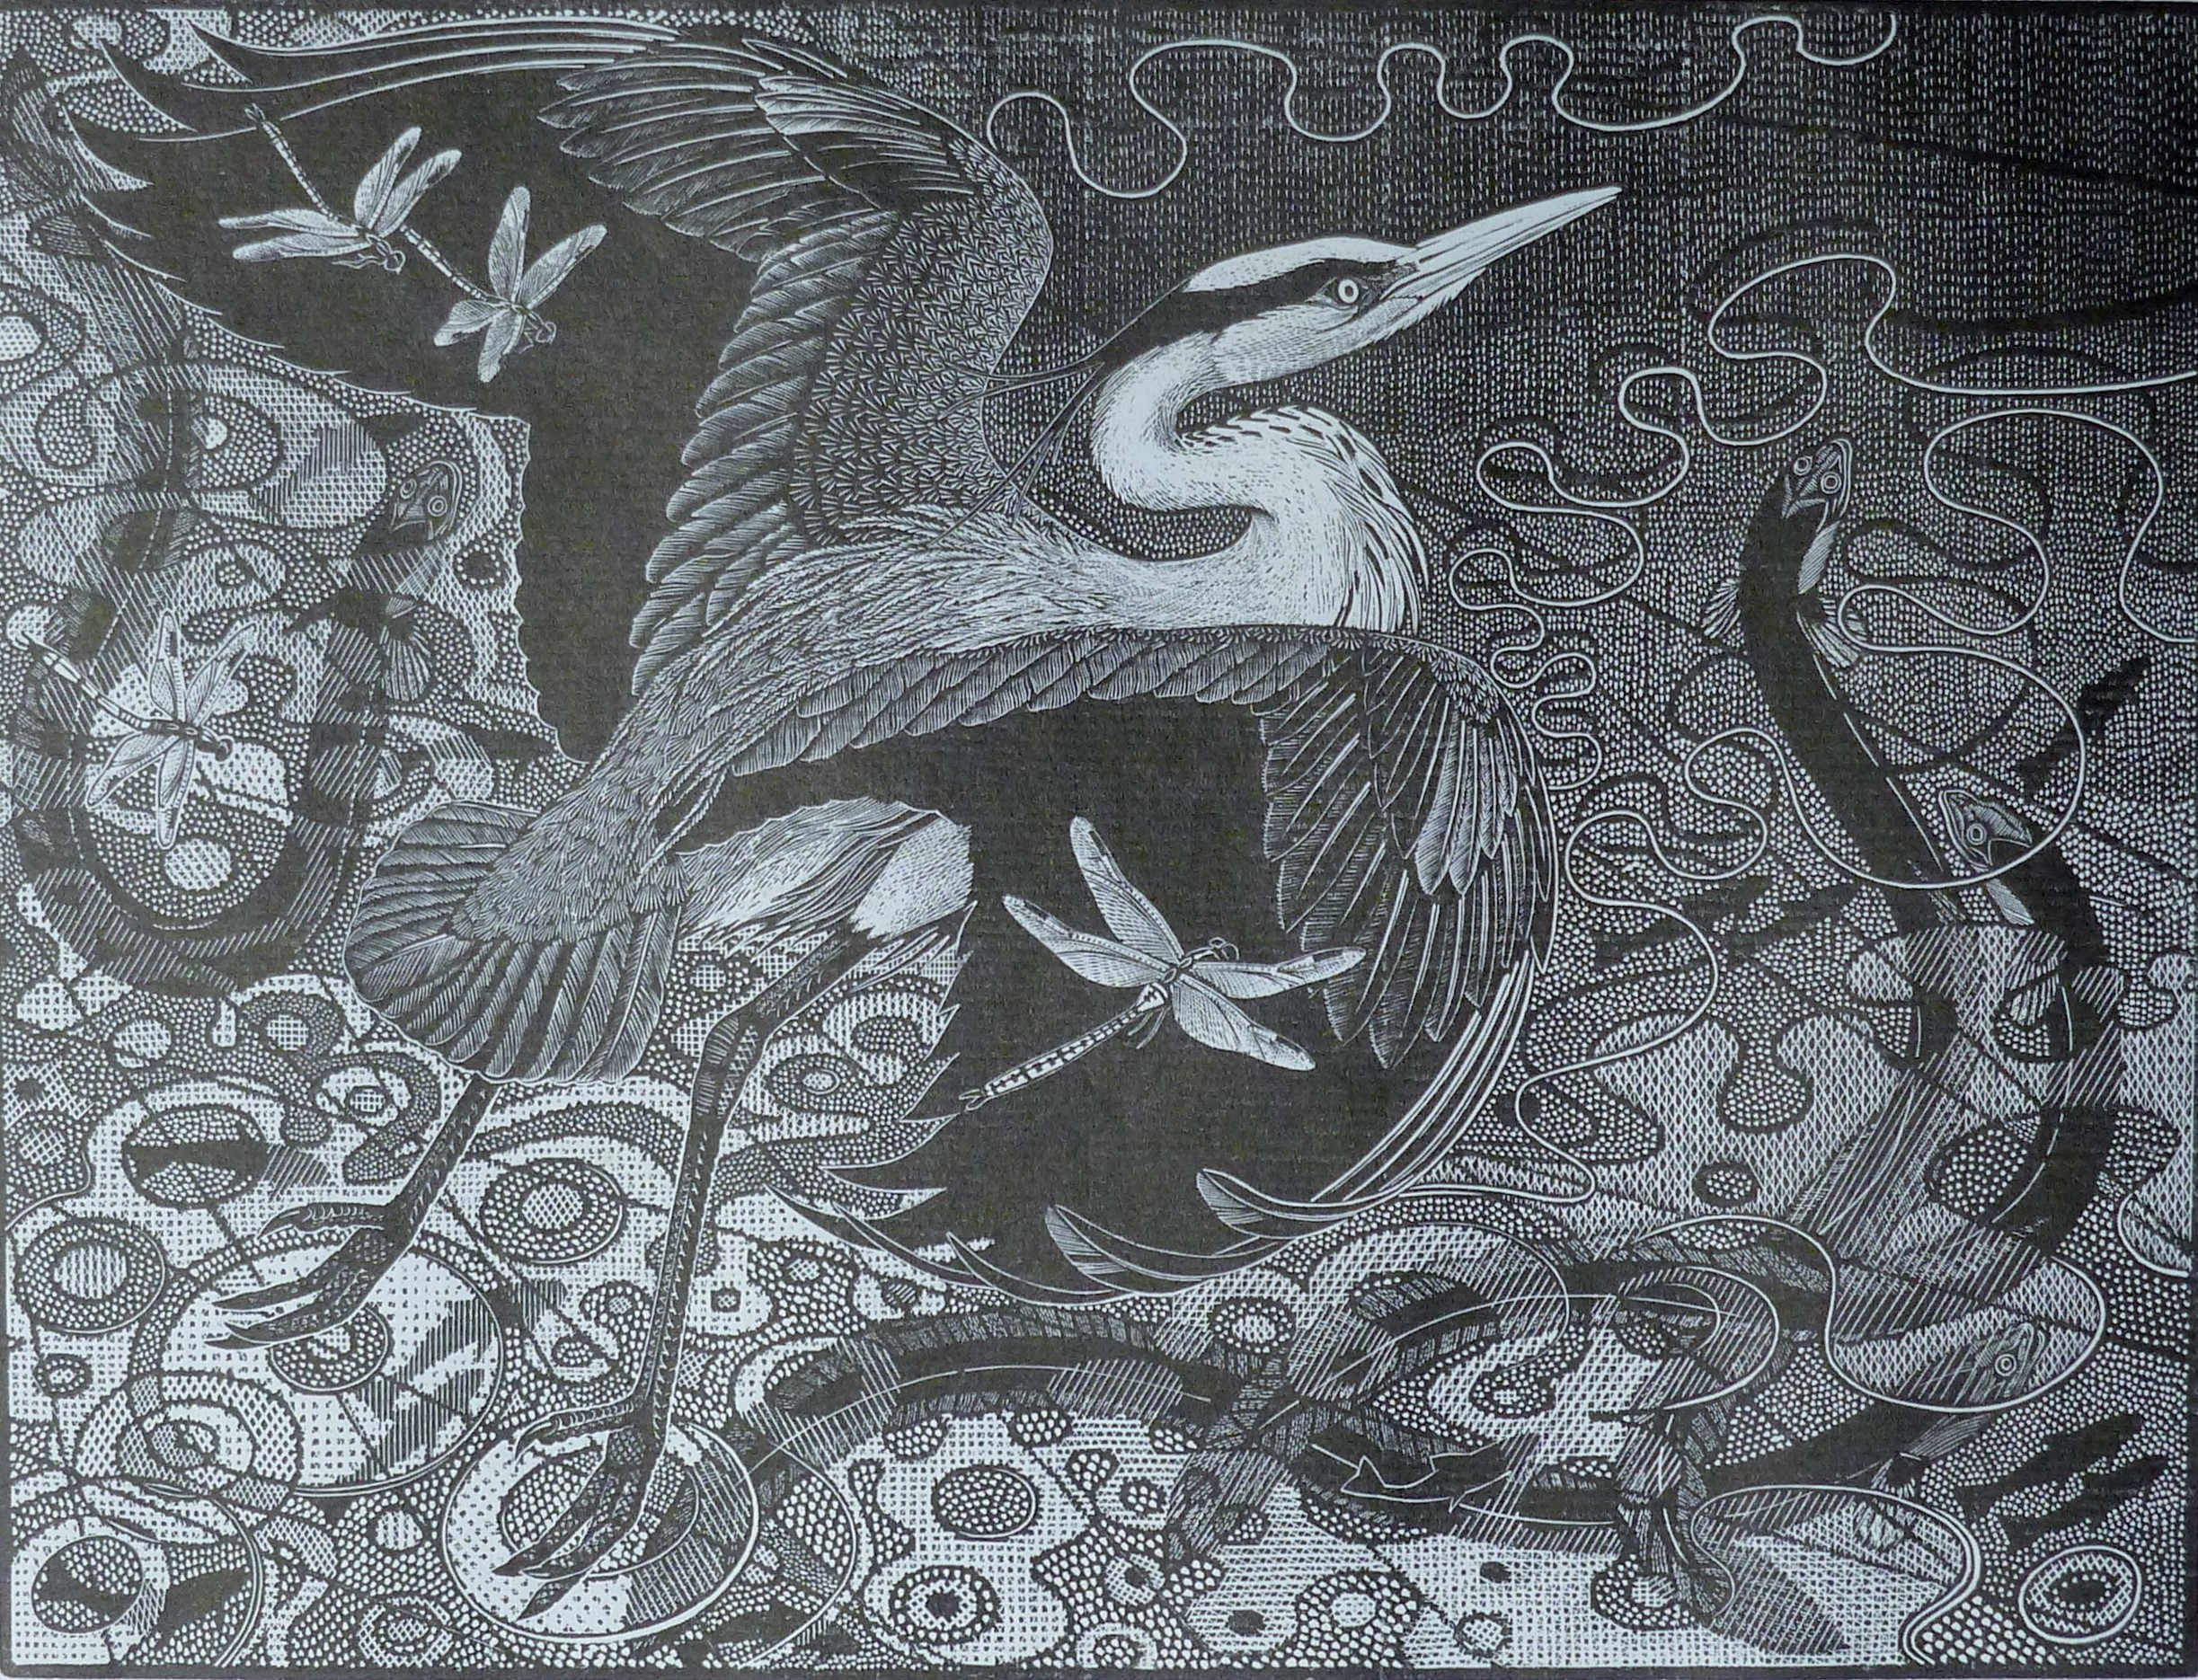 SEE-PAYNTON, COLIN (born 1946) British (AR), Grey Heron and Eel, wood engraving,